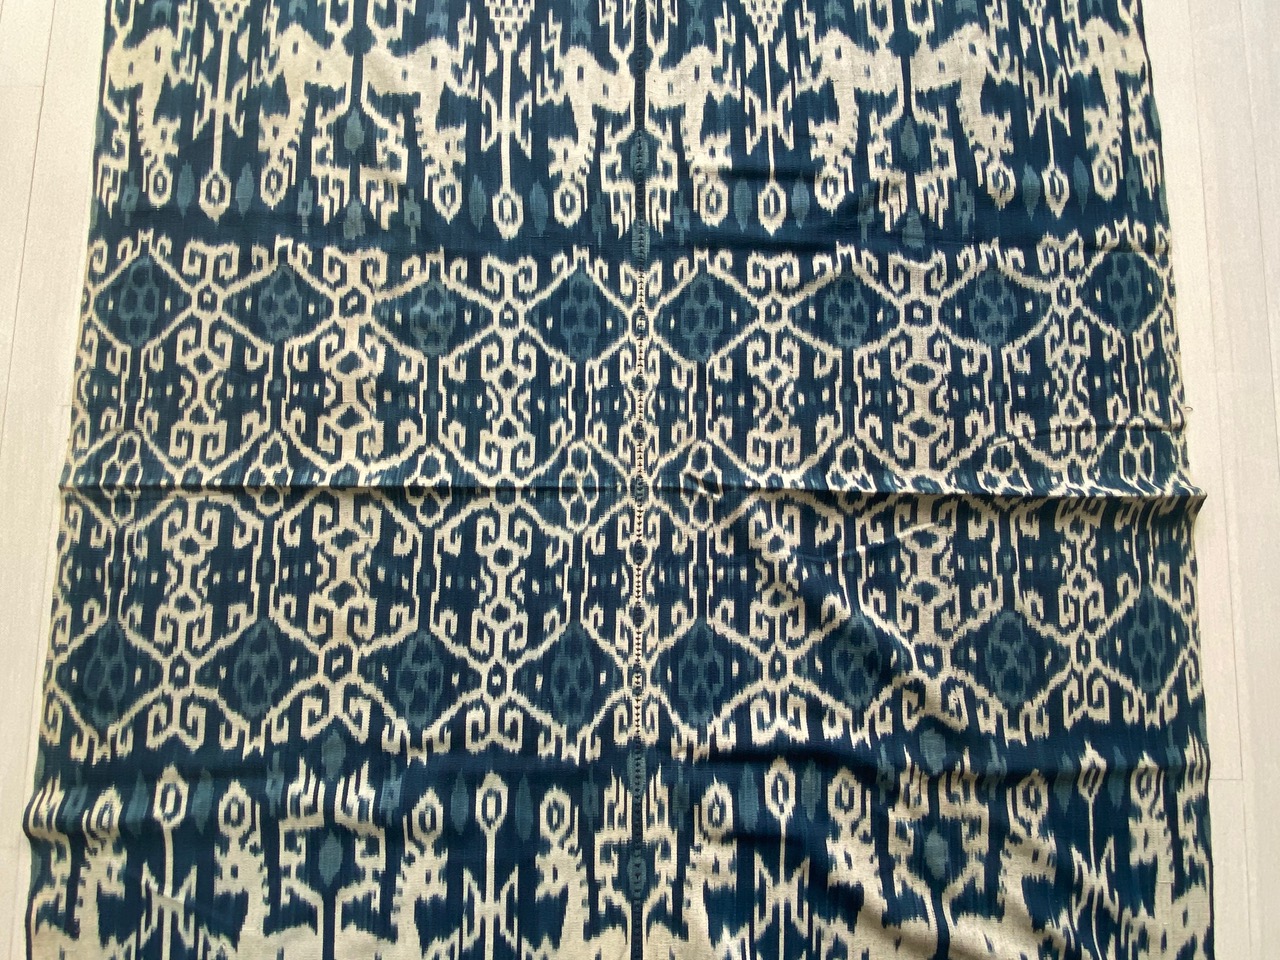 soft indigo Ikat, with stunning long tassels, from Sumba